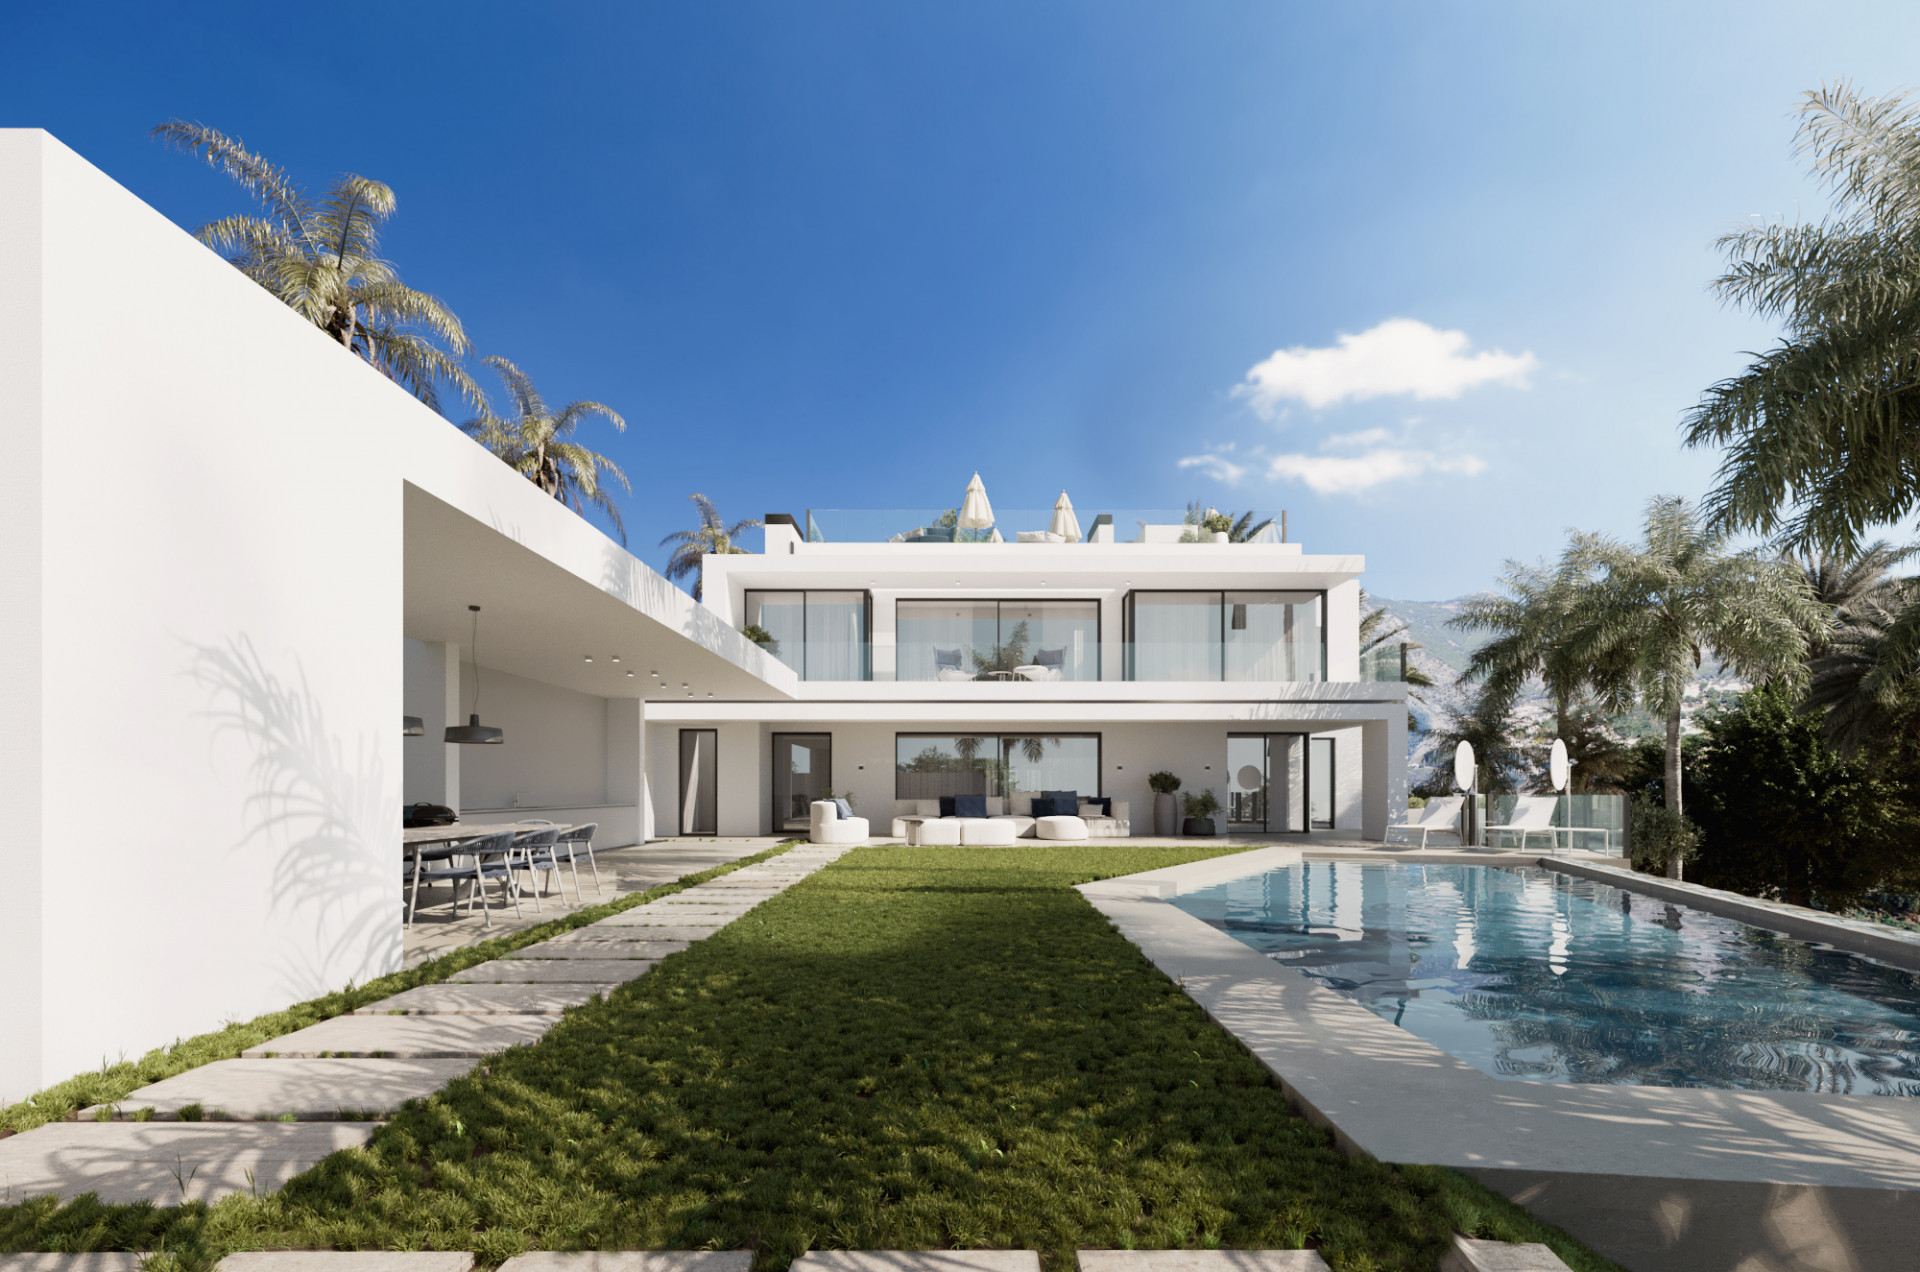 Fabulous contemporary style villa with 6 bedrooms in the exclusive area of Cascada de Camoján, Marbella.